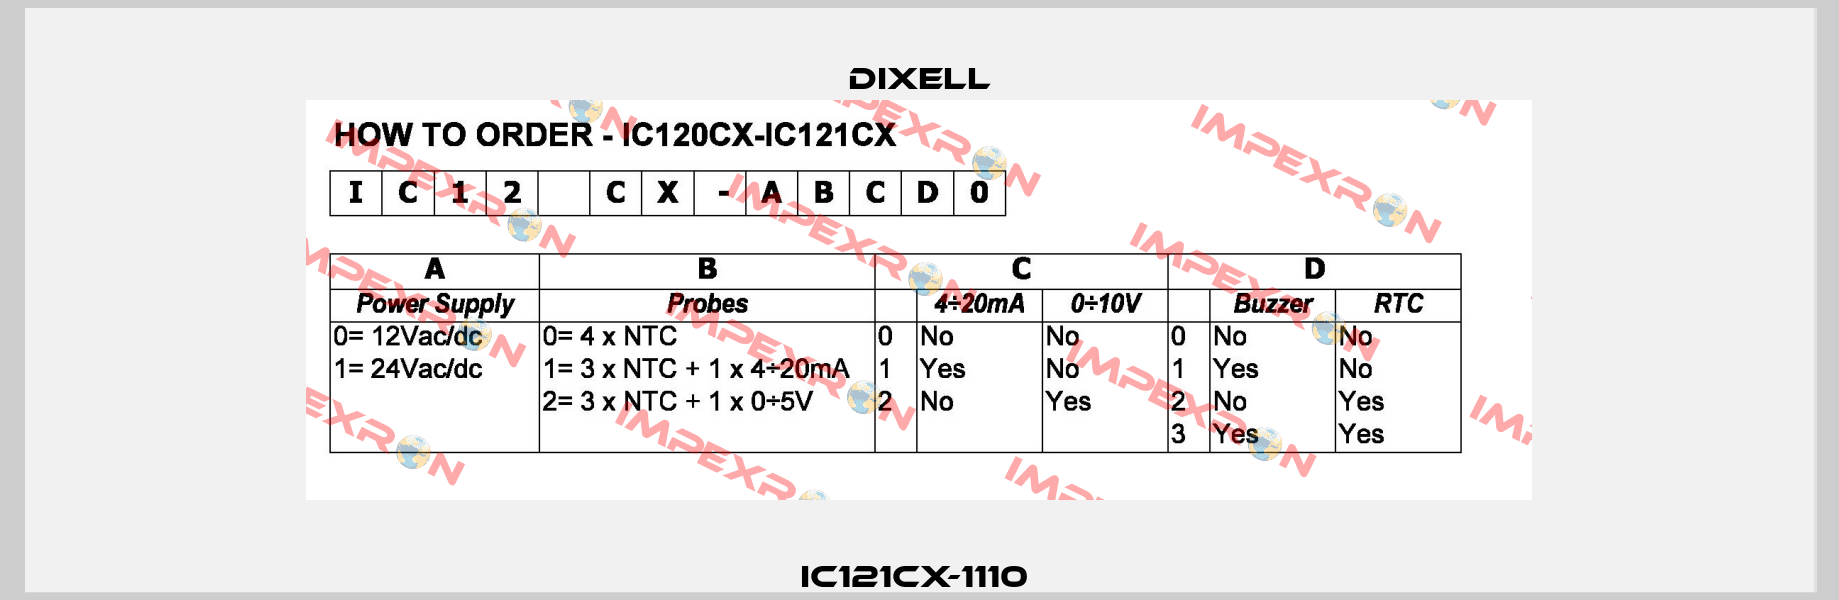 IC121CX-1110  Dixell